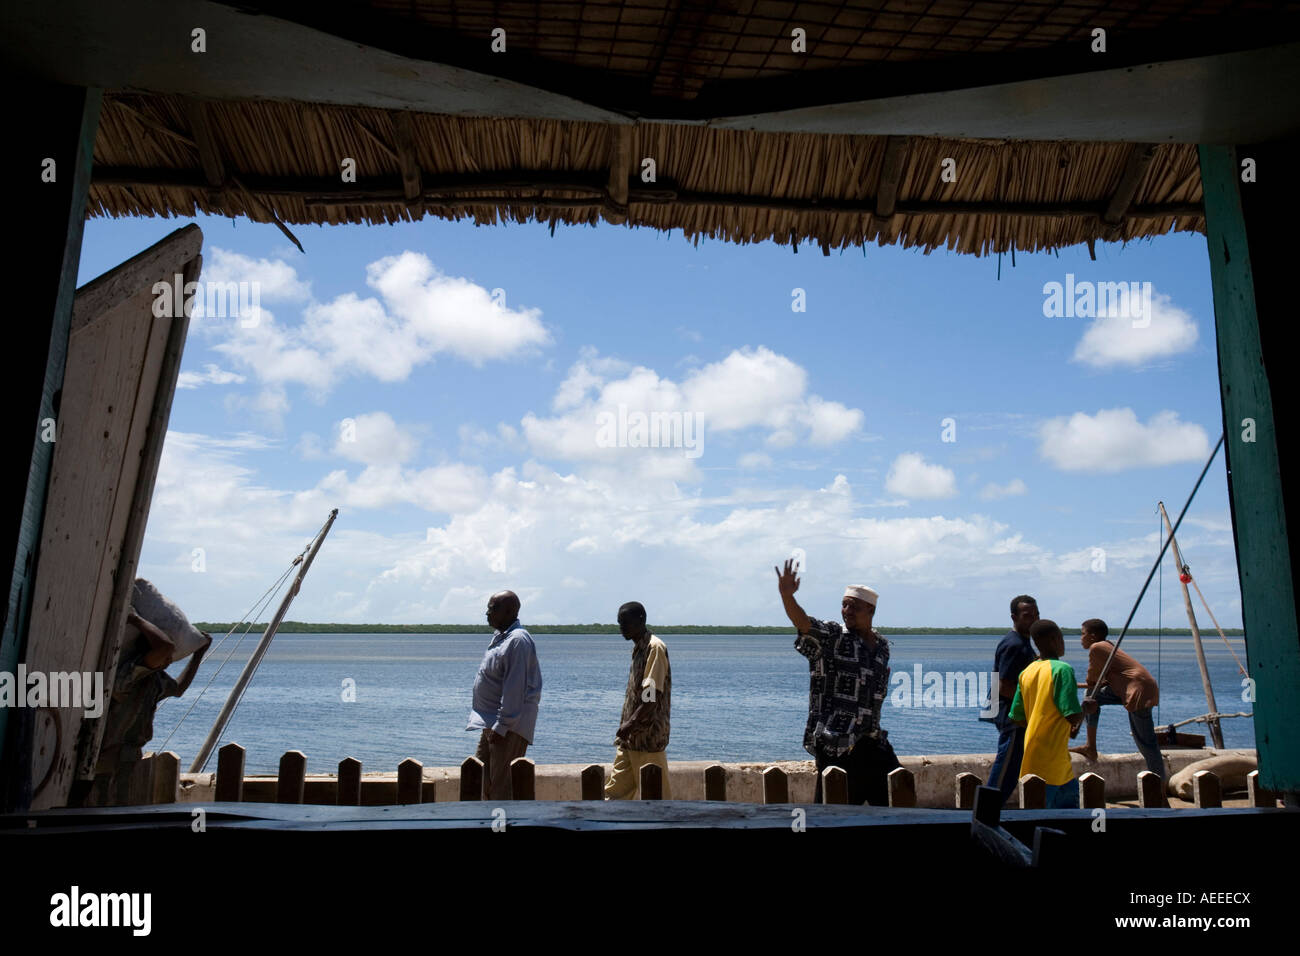 Men walking by on seafront seen through window in Lamu Kenya Stock Photo